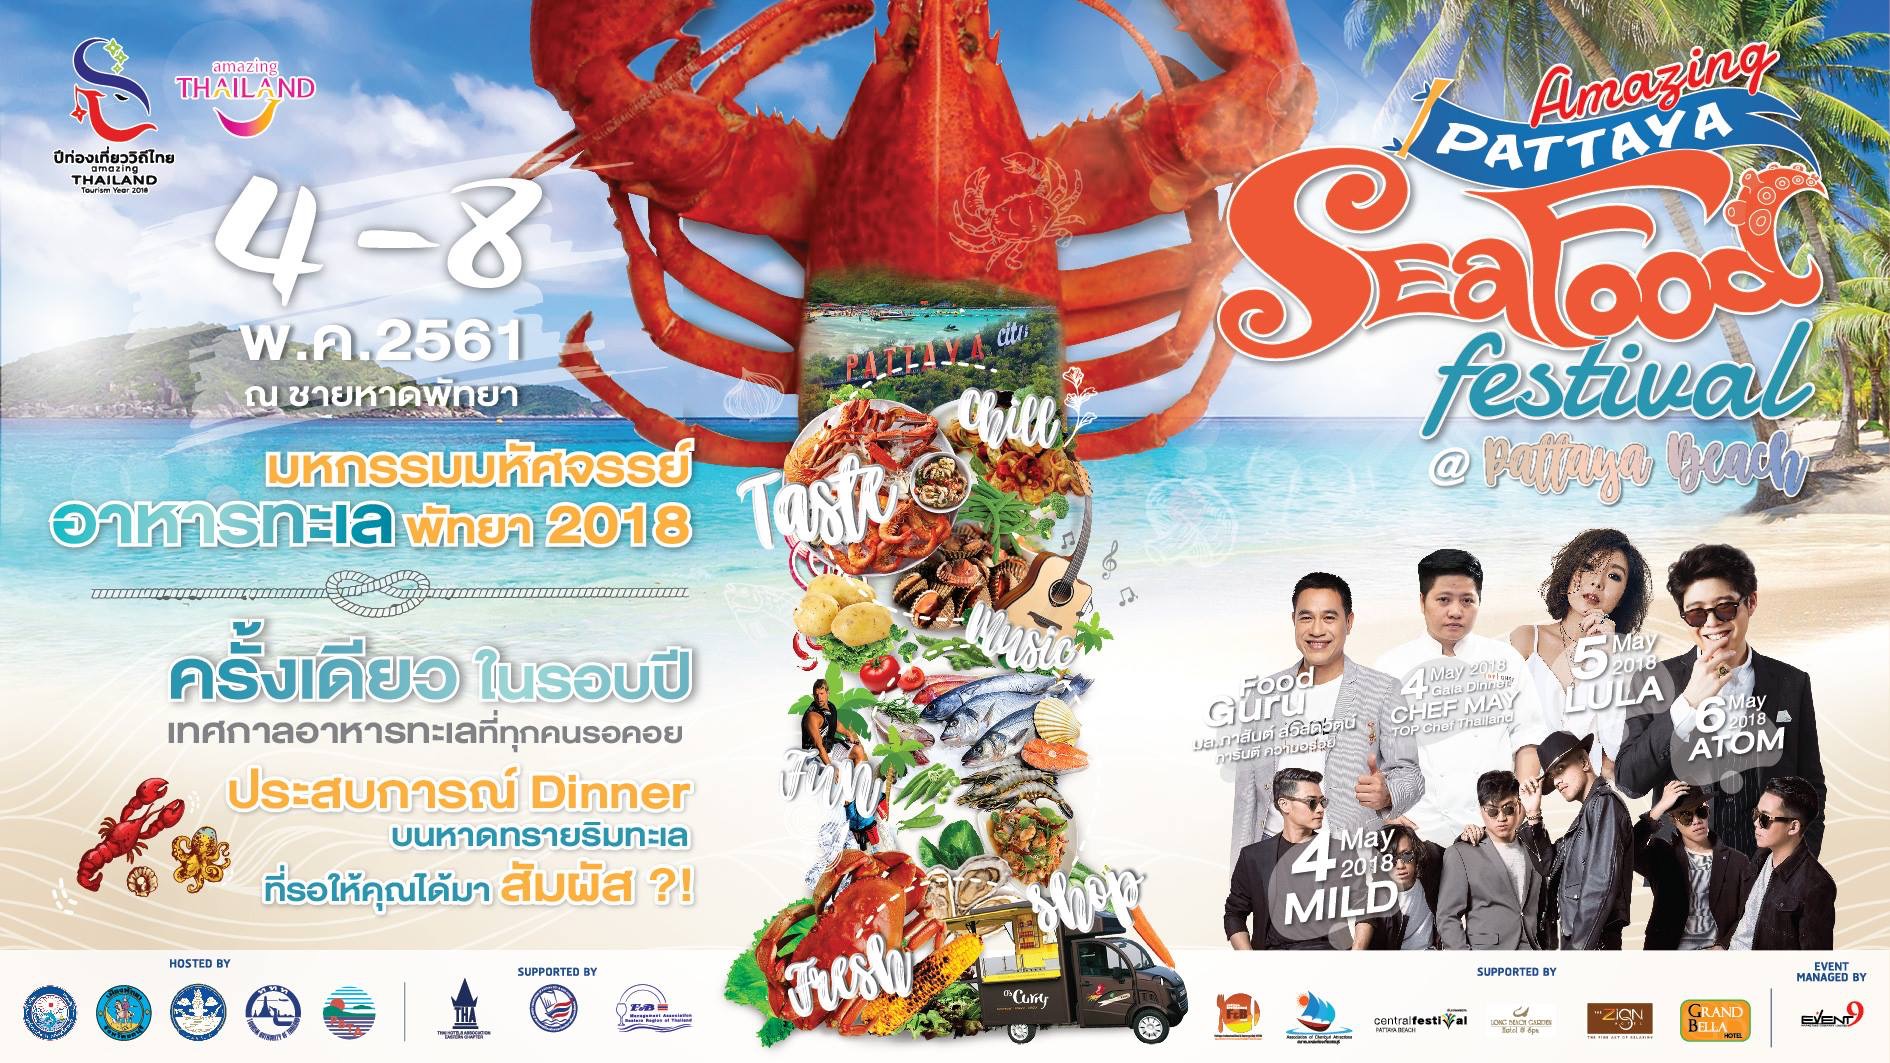 pattaya seafood festival.jpg